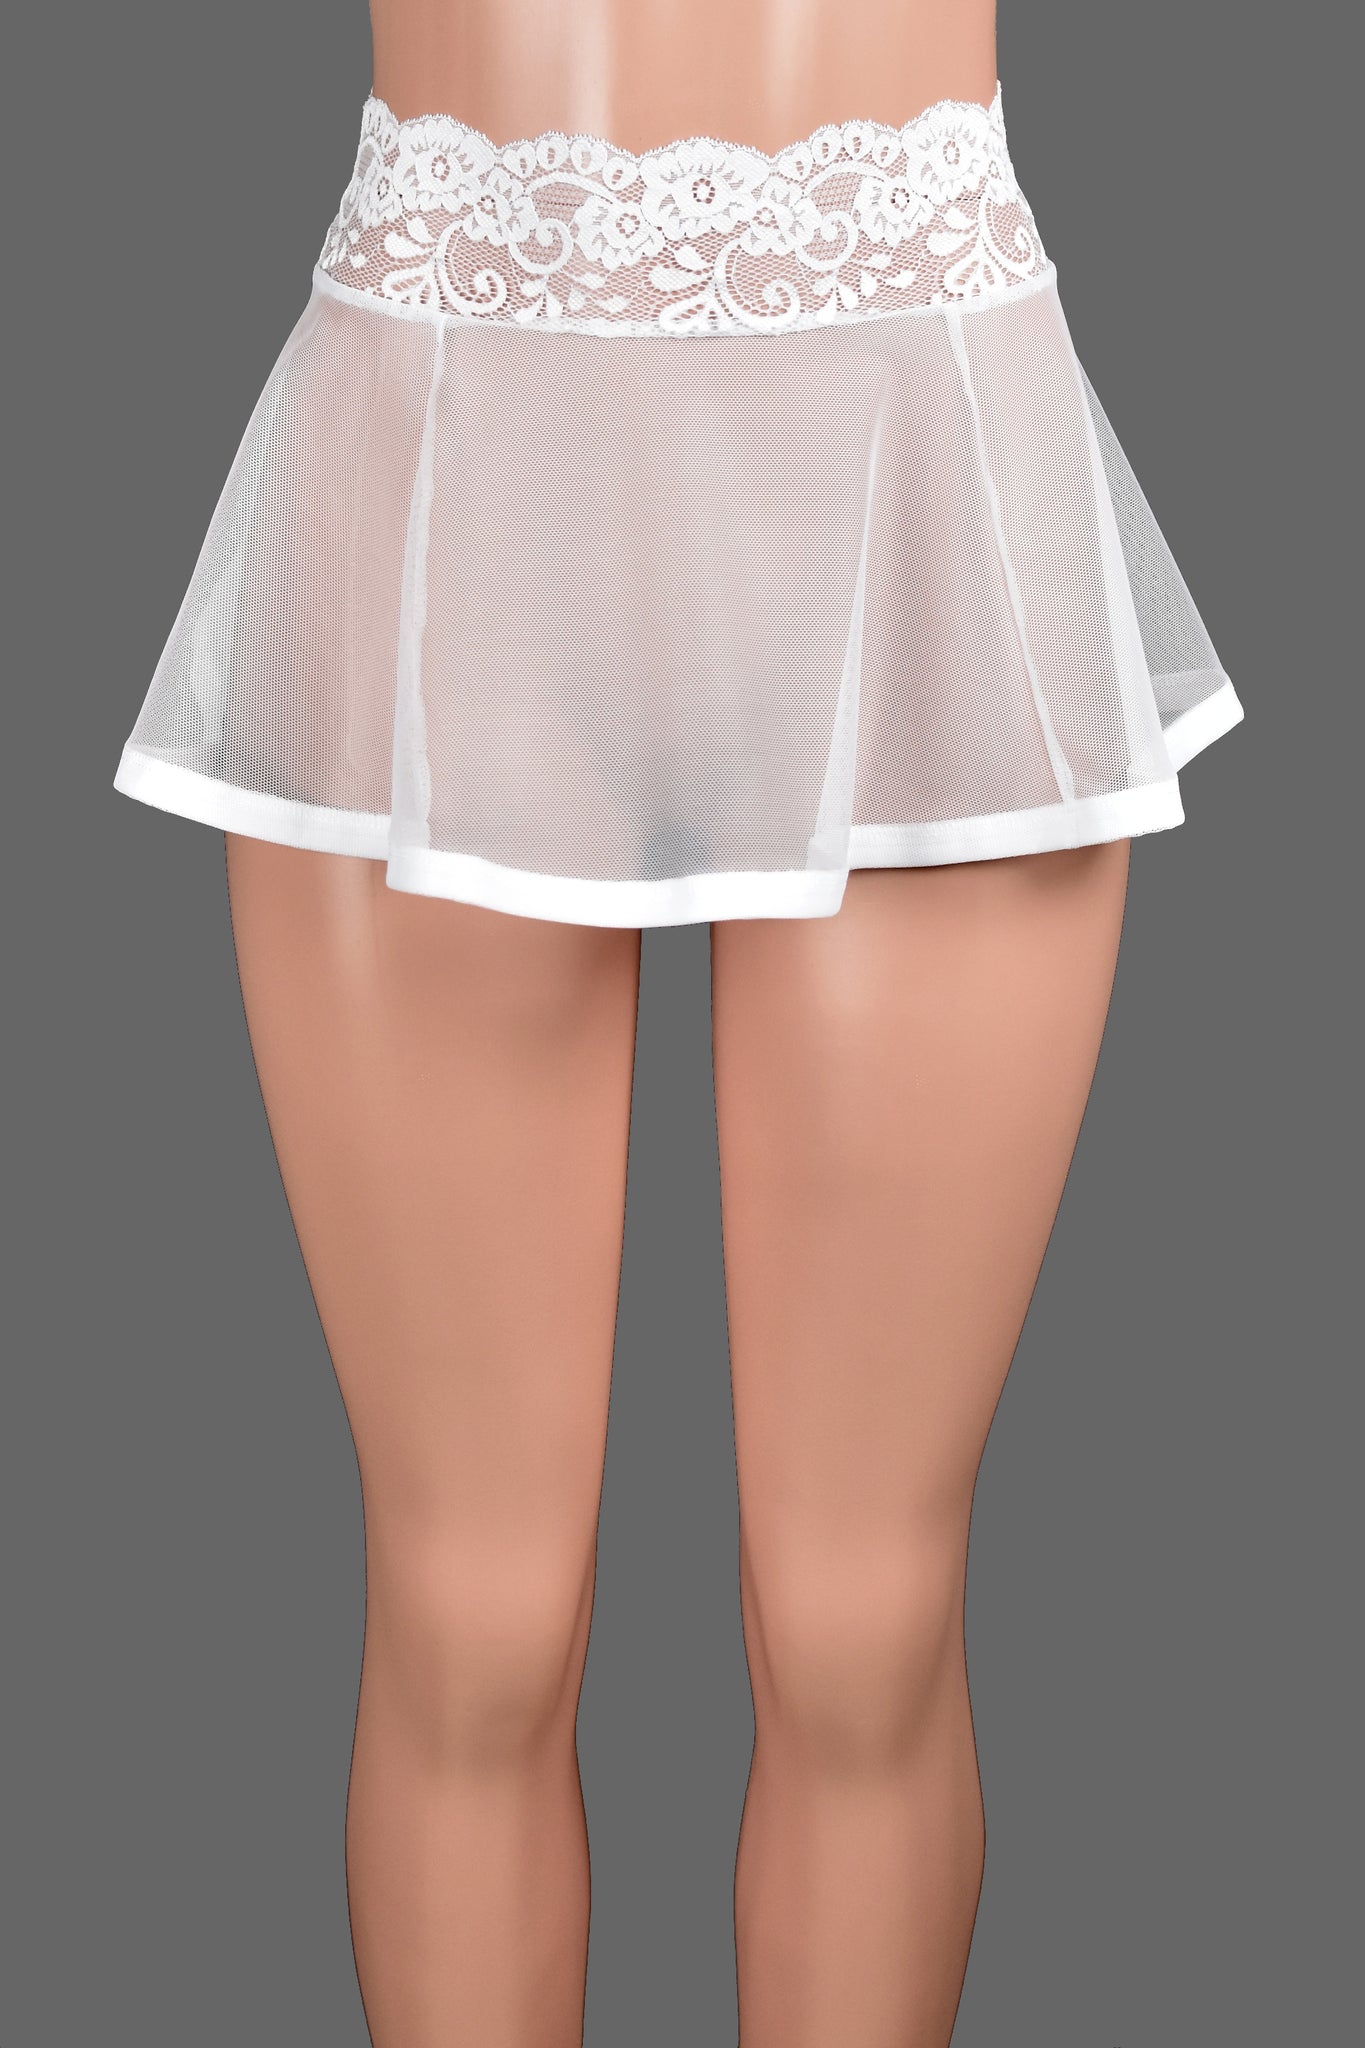 White Mesh Mini Skirt Stretch Lace Sheer Skirt Lingerie XS to 3XL p pic